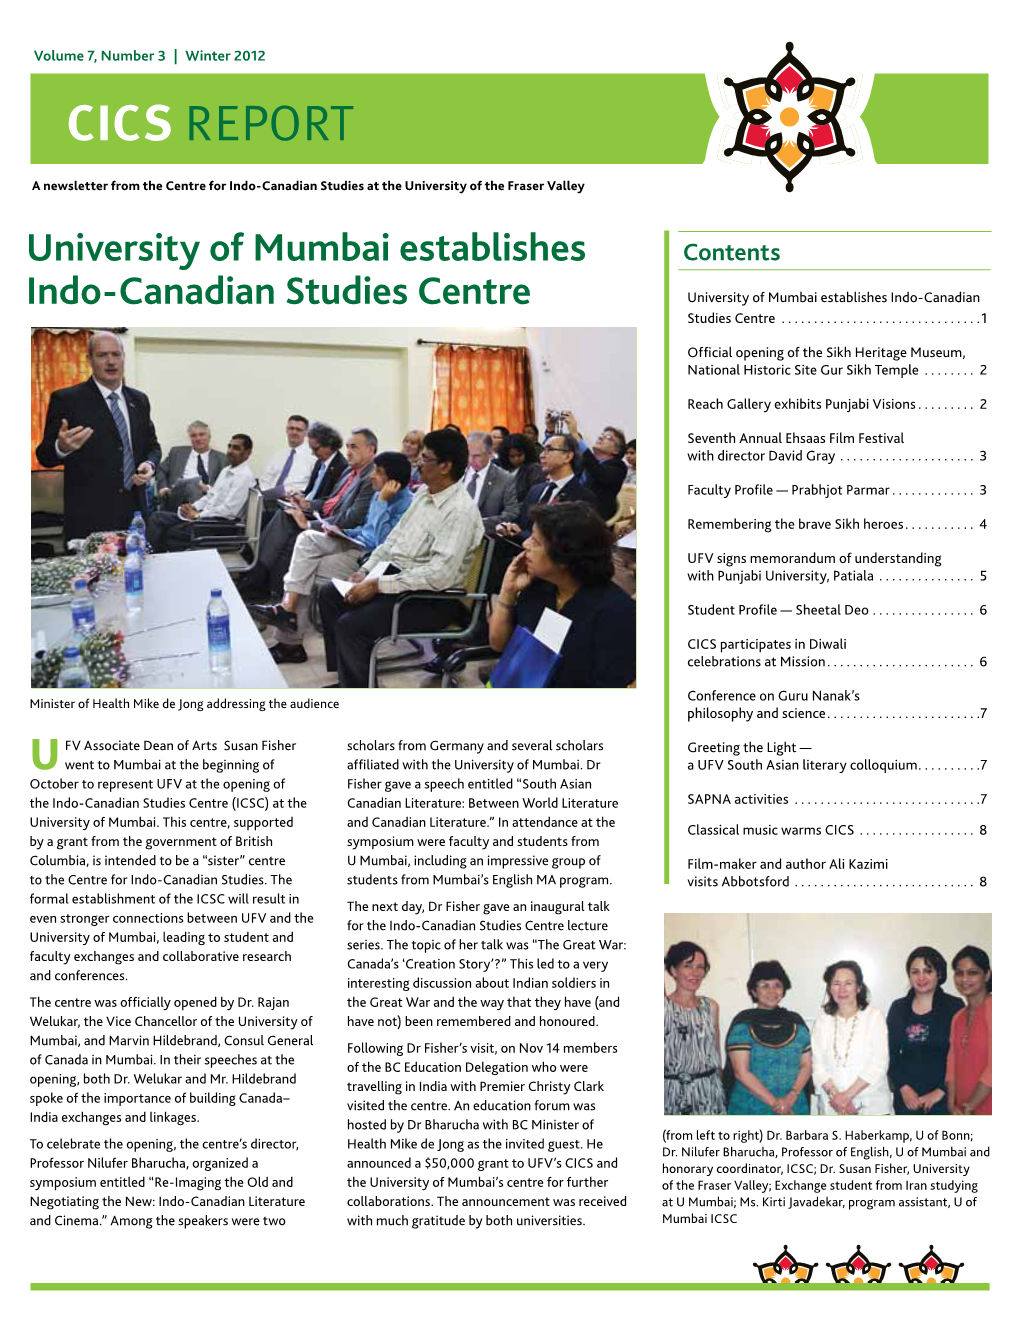 University of Mumbai Establishes Indo-Canadian Studies Centre